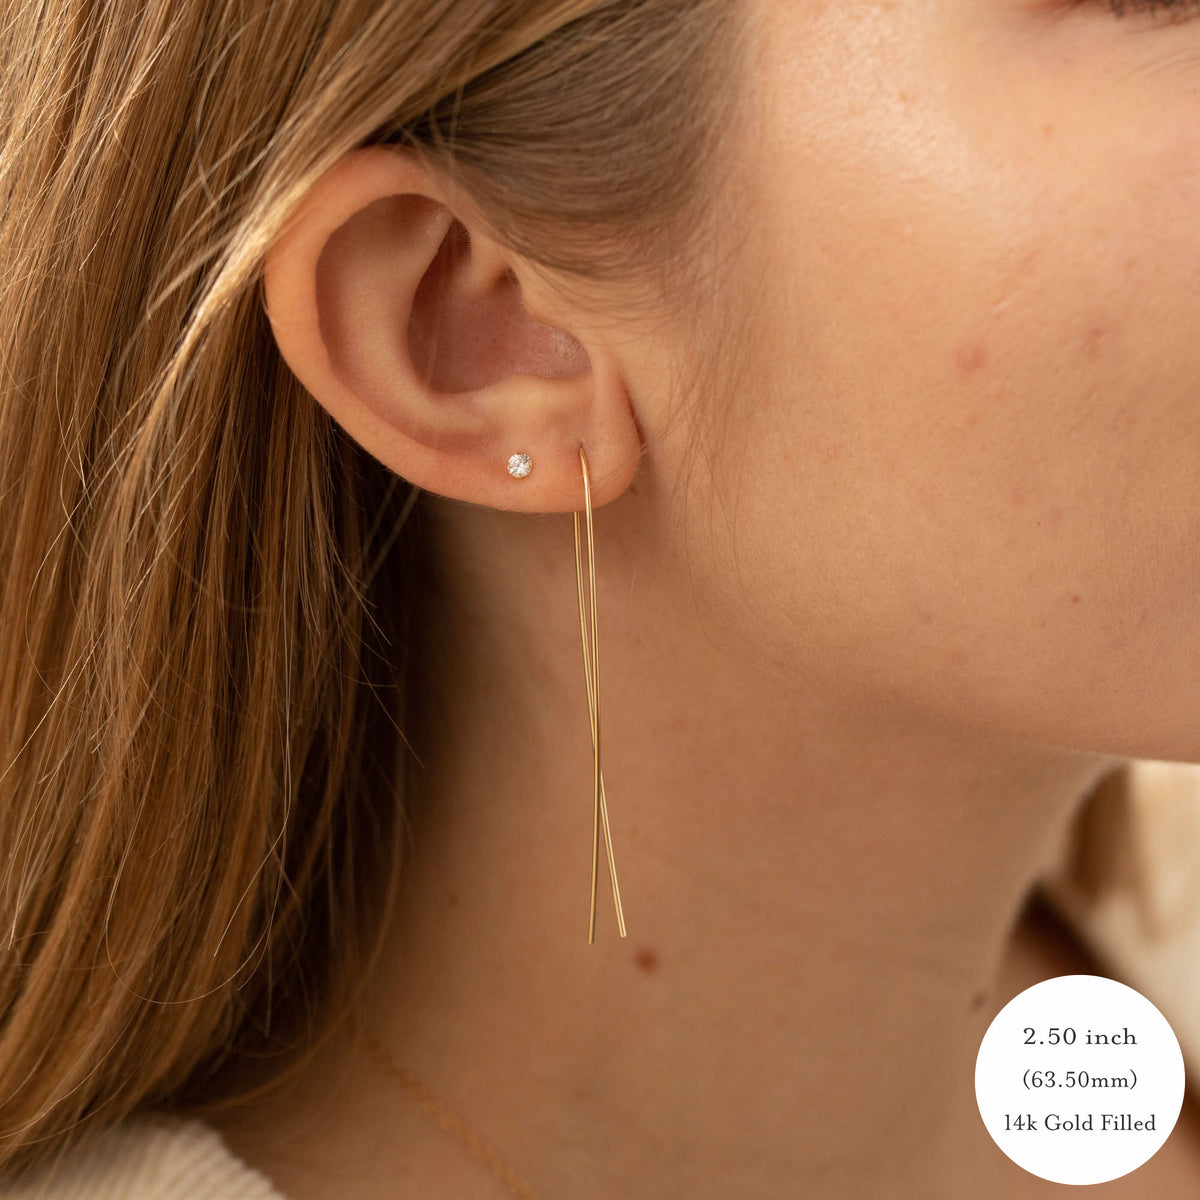 2.50 inch, 63.50mm, 14K Gold Filled Jesus Fish Threader Earrings on a model, Laurane Elisabeth